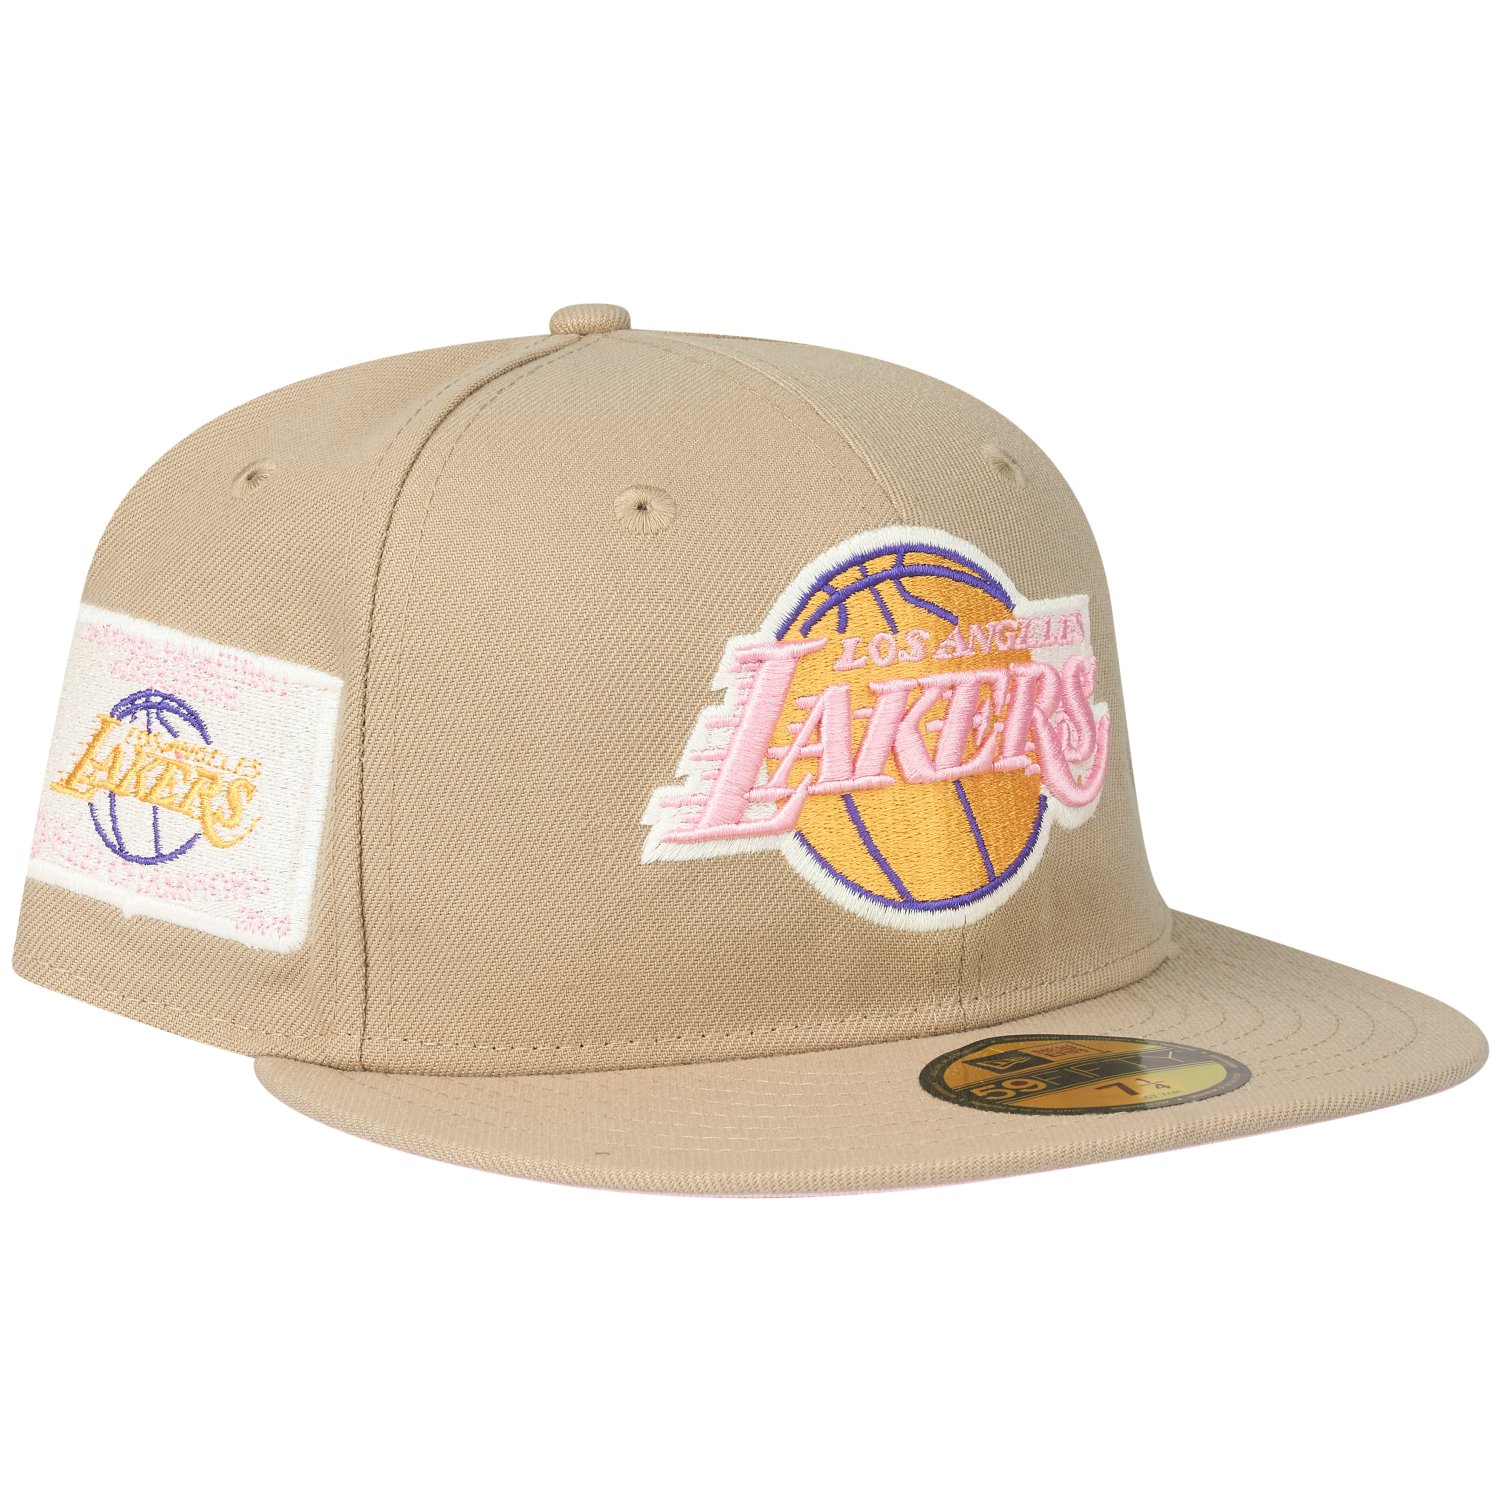 New Era 9Fifty Snapback Cap Los Angeles Lakers camel beige 